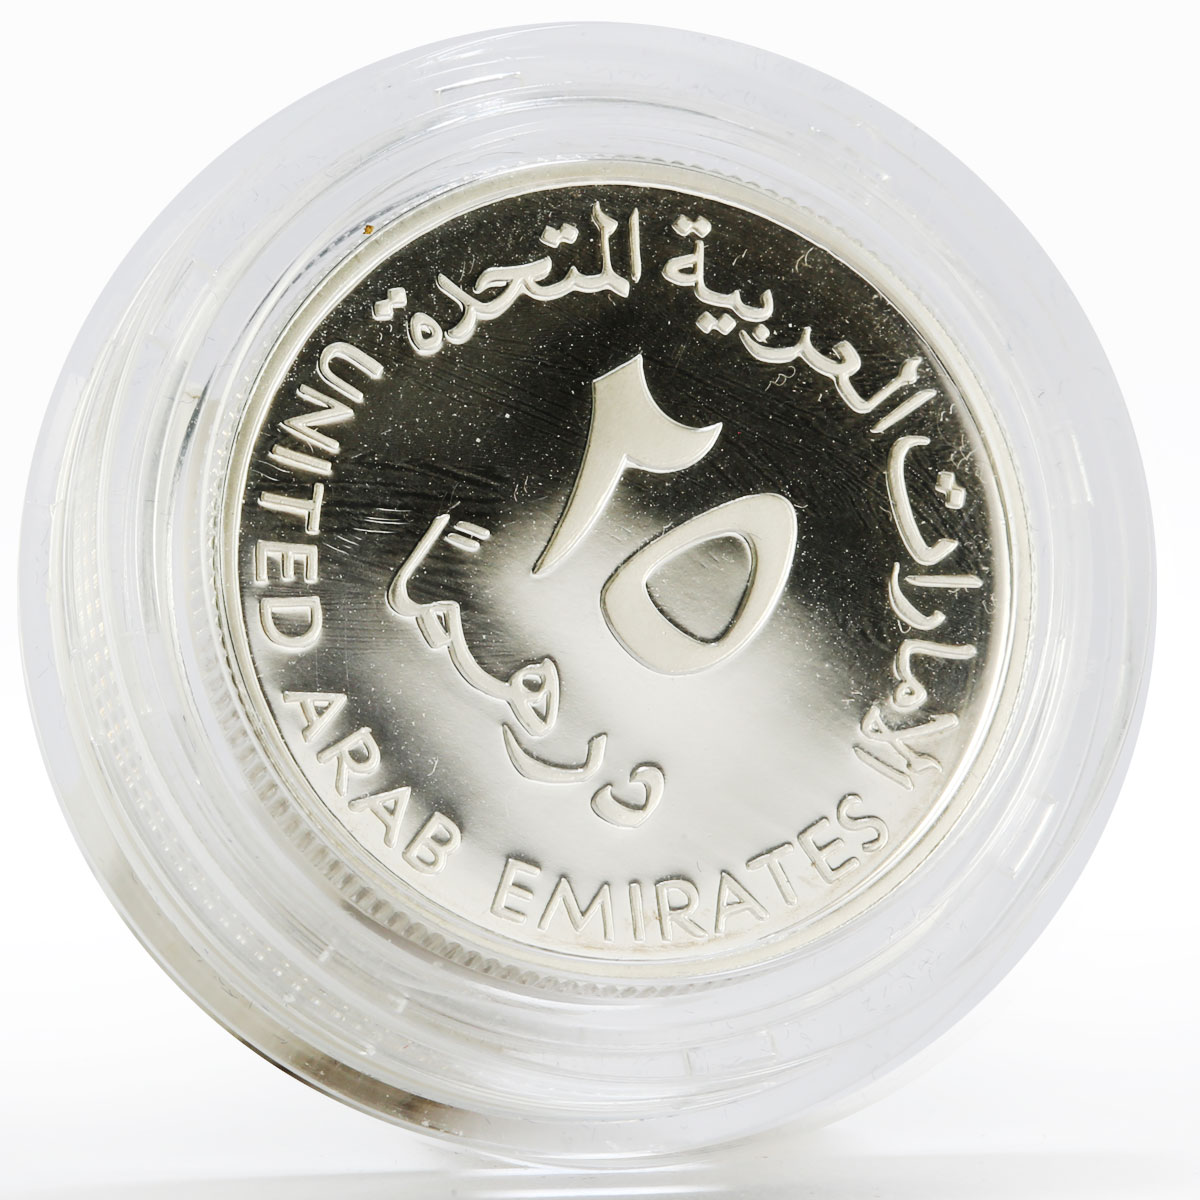 United Arab Emirates 25 dirhams National Bank of Dubai proof silver coin 1998